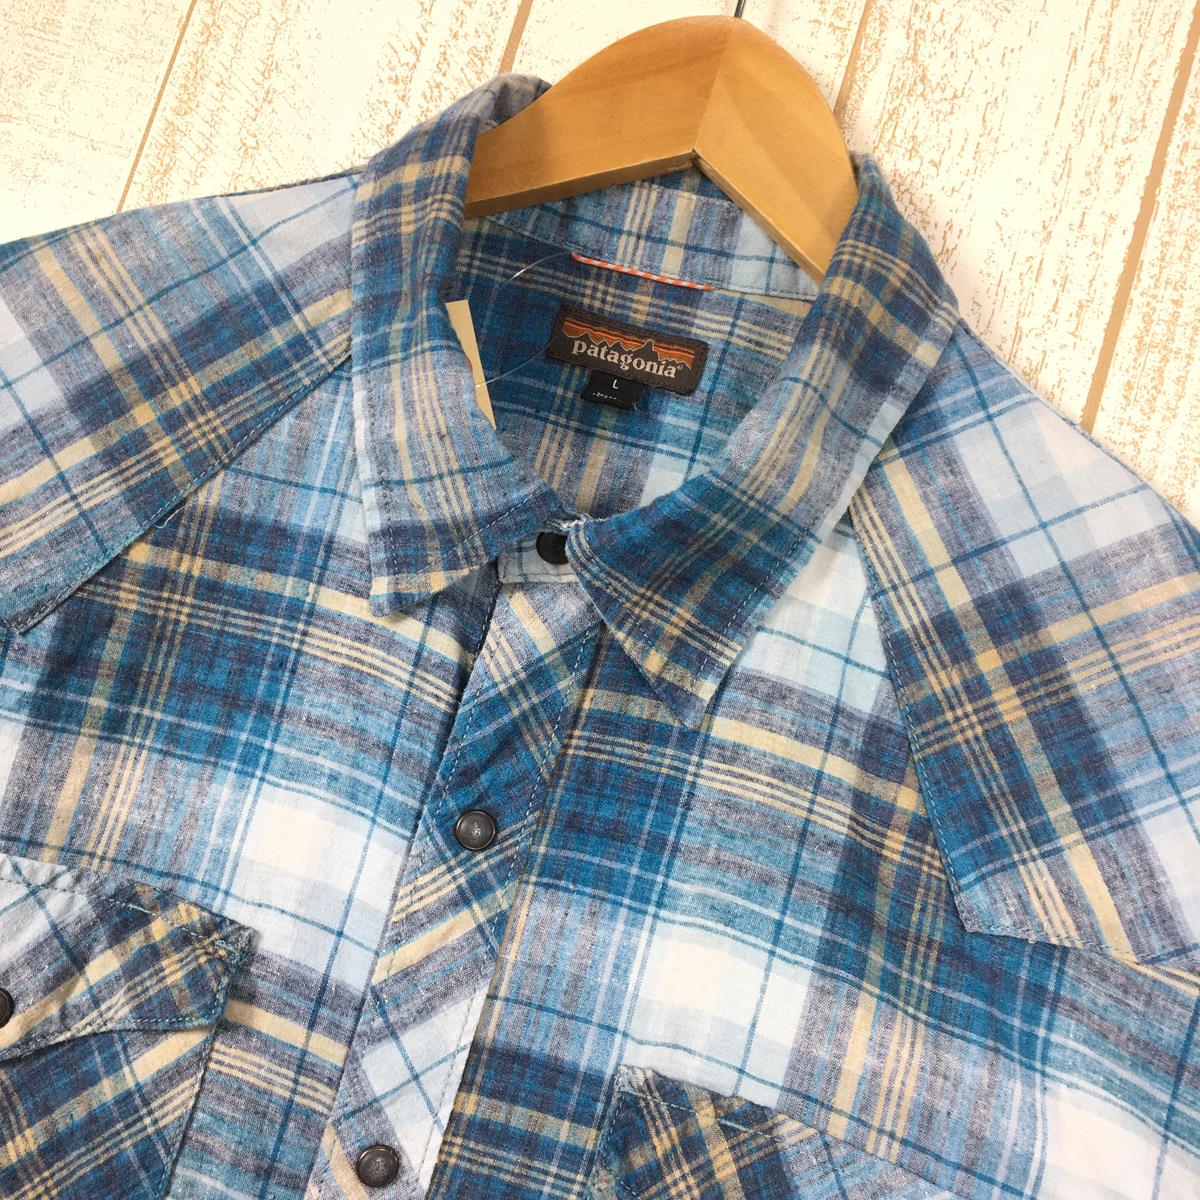 【MEN's L】 パタゴニア ロングスリーブ ウエスタン スナップ シャツ Long-Sleeved Western Snap Shirt ヘンプ ワークウェア シリーズ 生産終了モデル 入手困難 PATAGONIA 53330 HDSB ブルー系